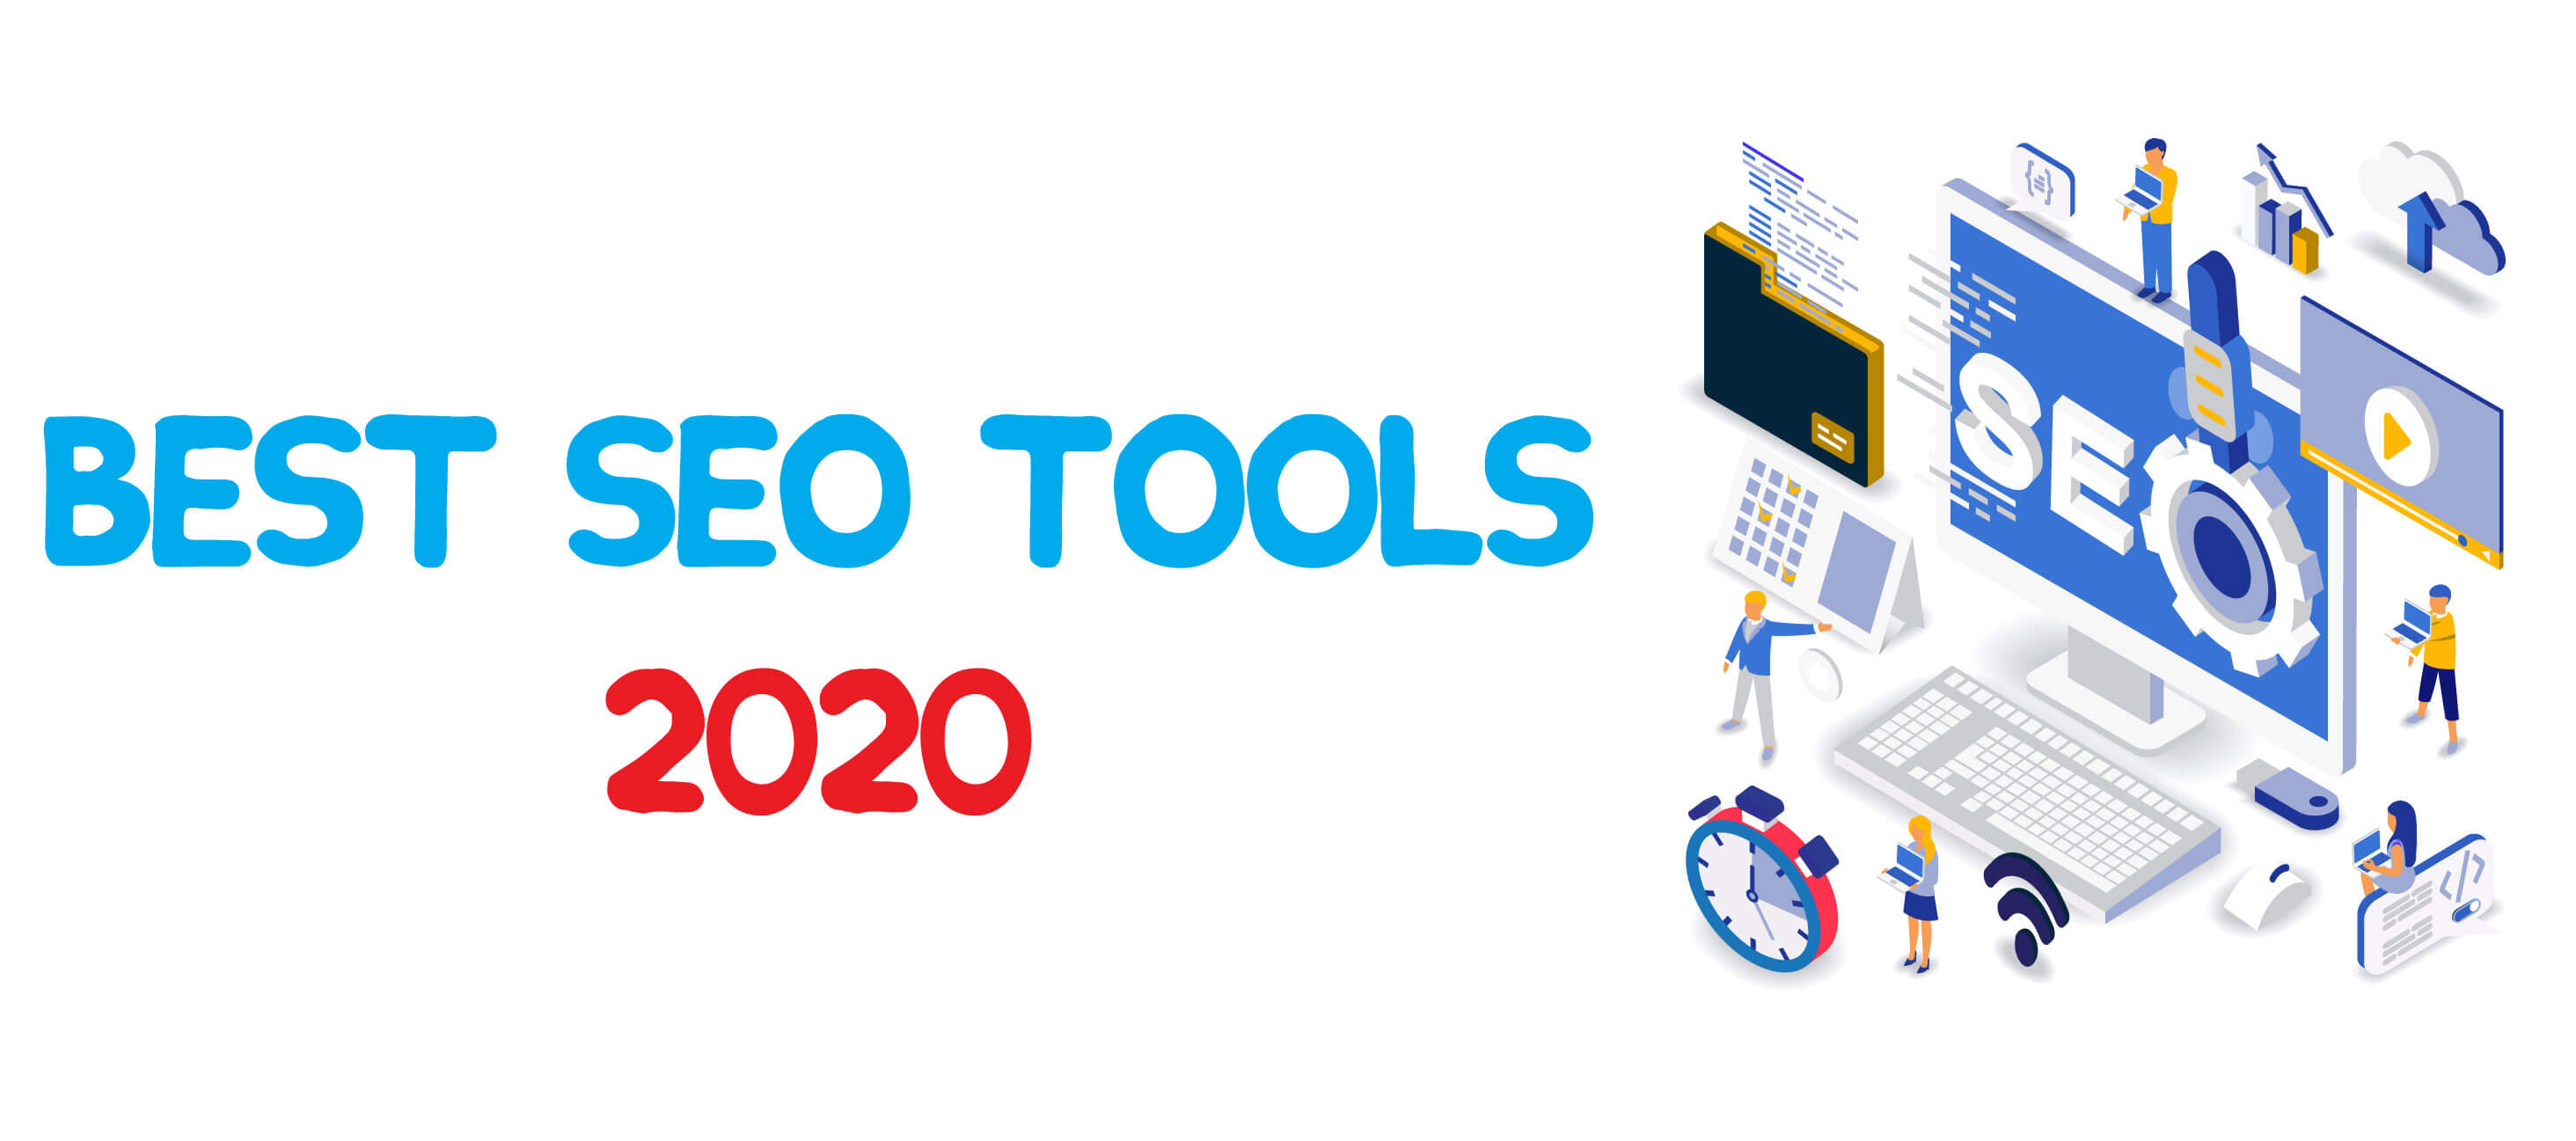 best seo tools 2020